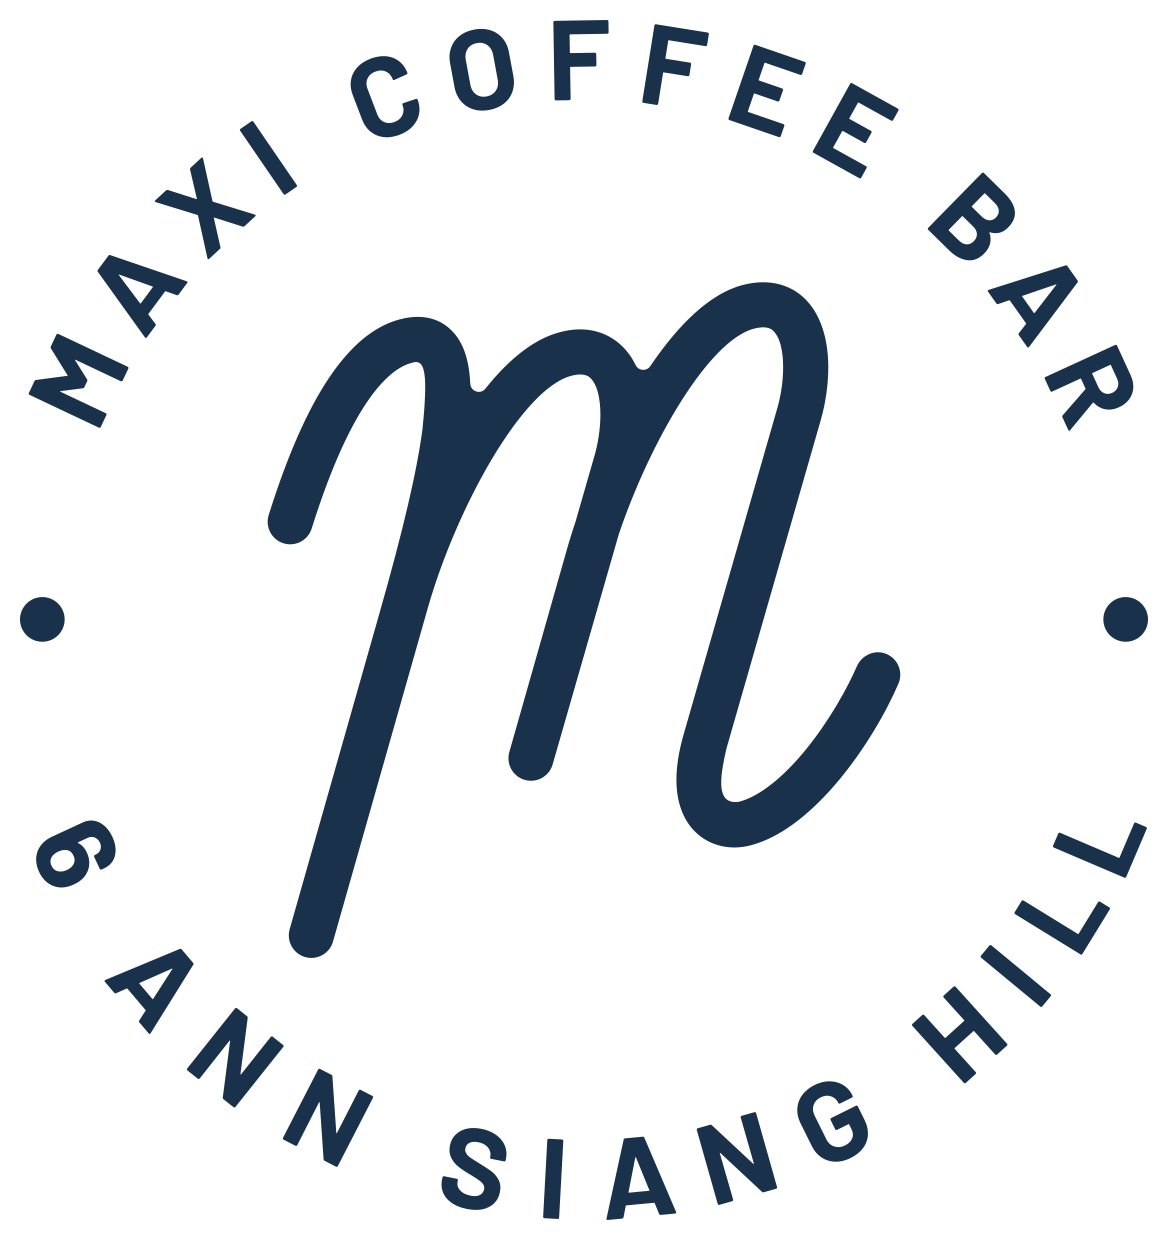 Maxi Coffee Bar